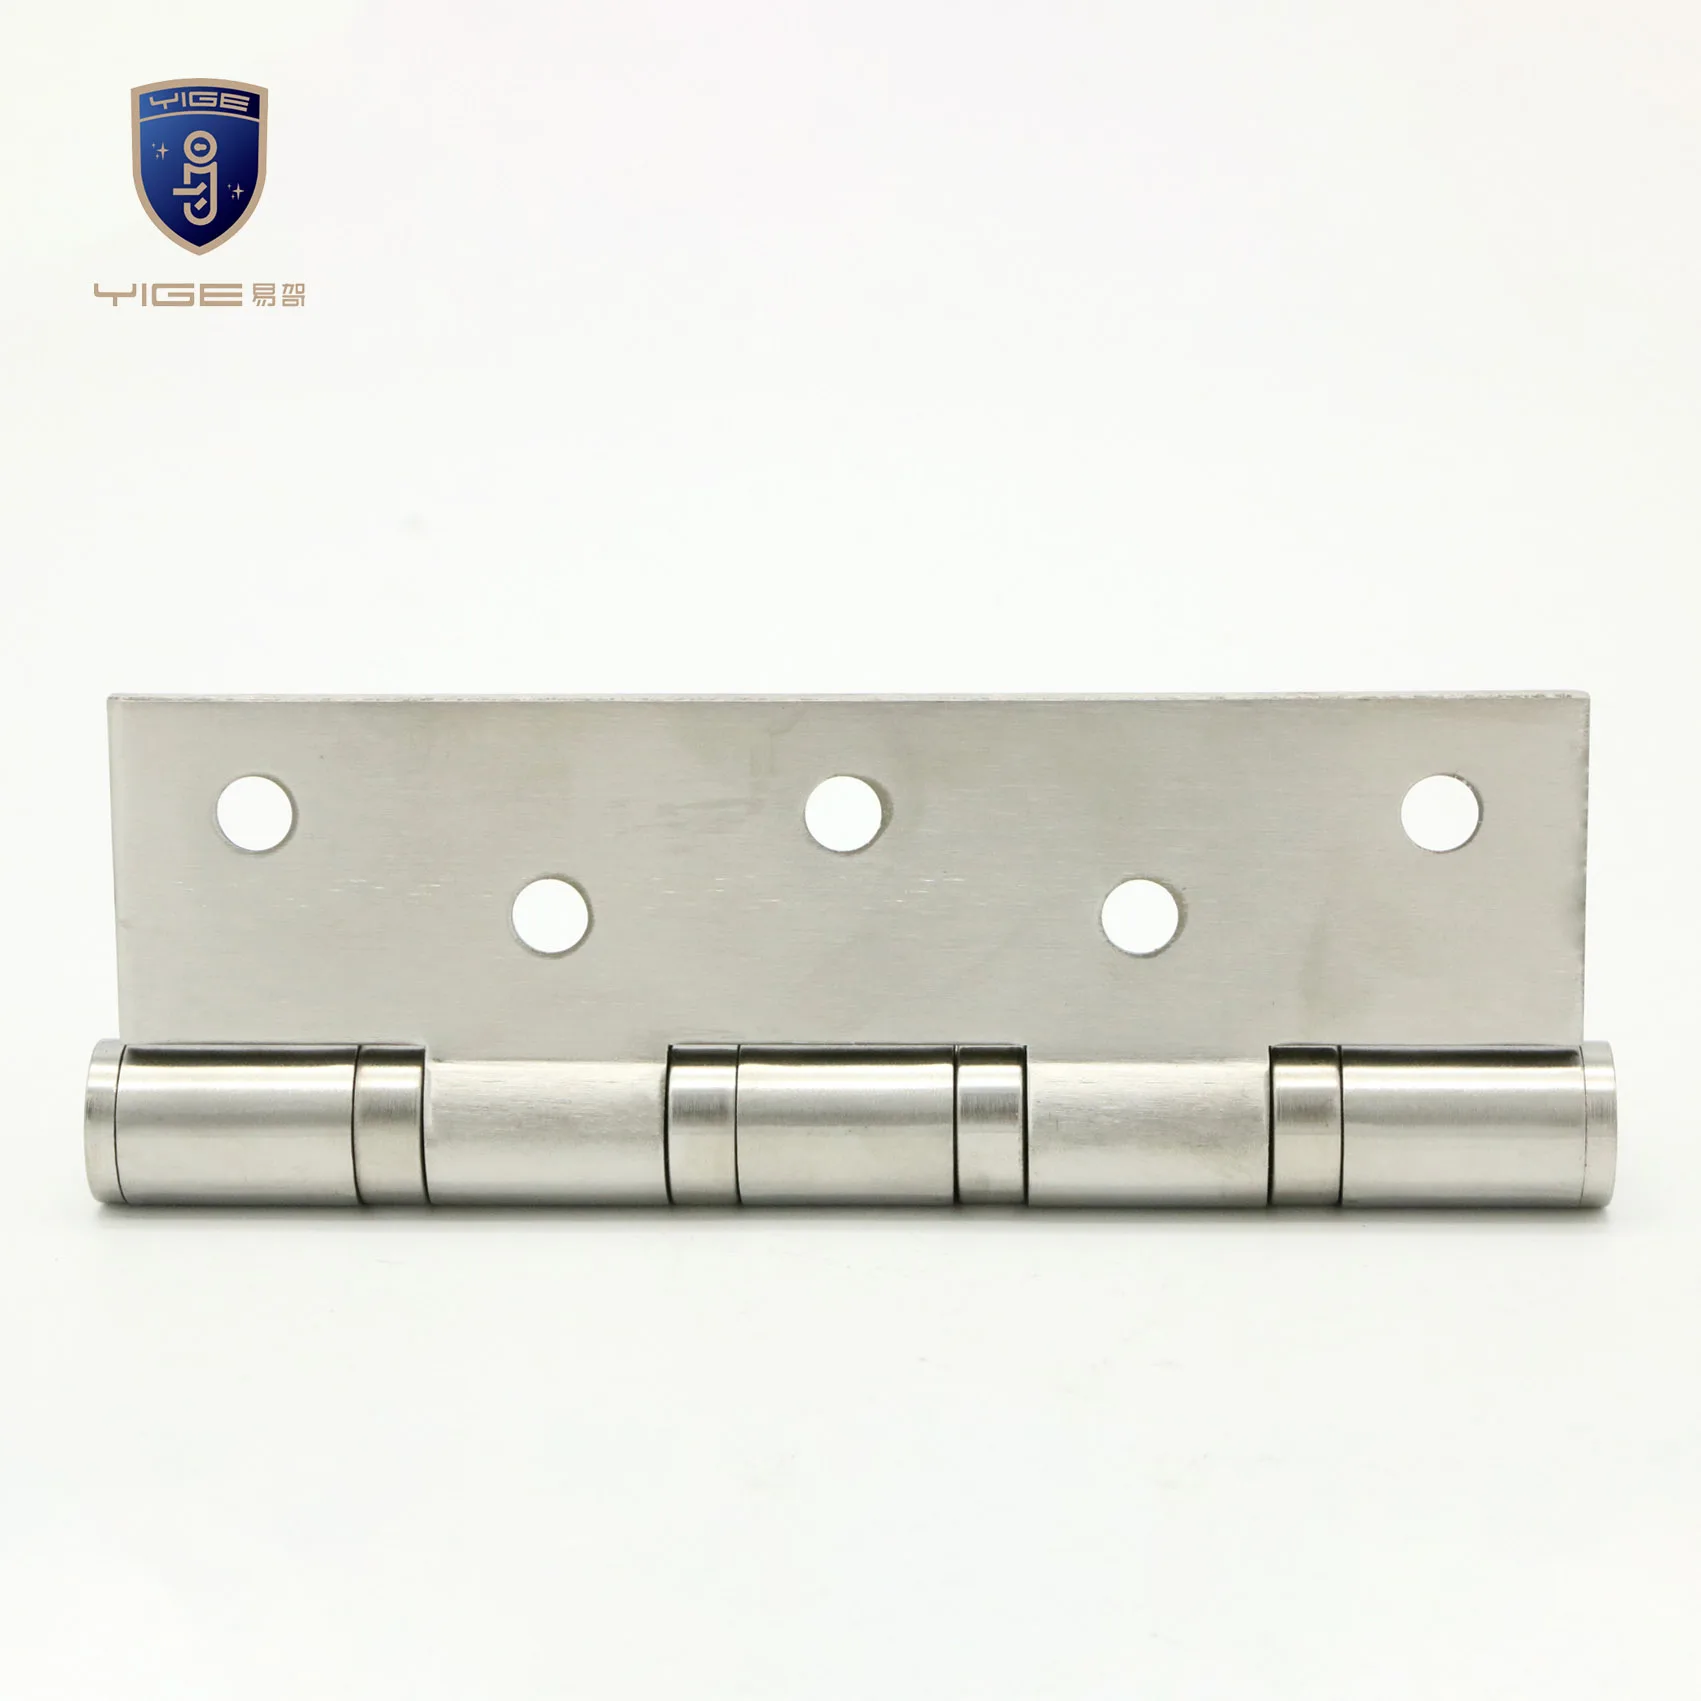 Überlegene qualität Goldene kupfer Moderne folding aluminium tür scharnier